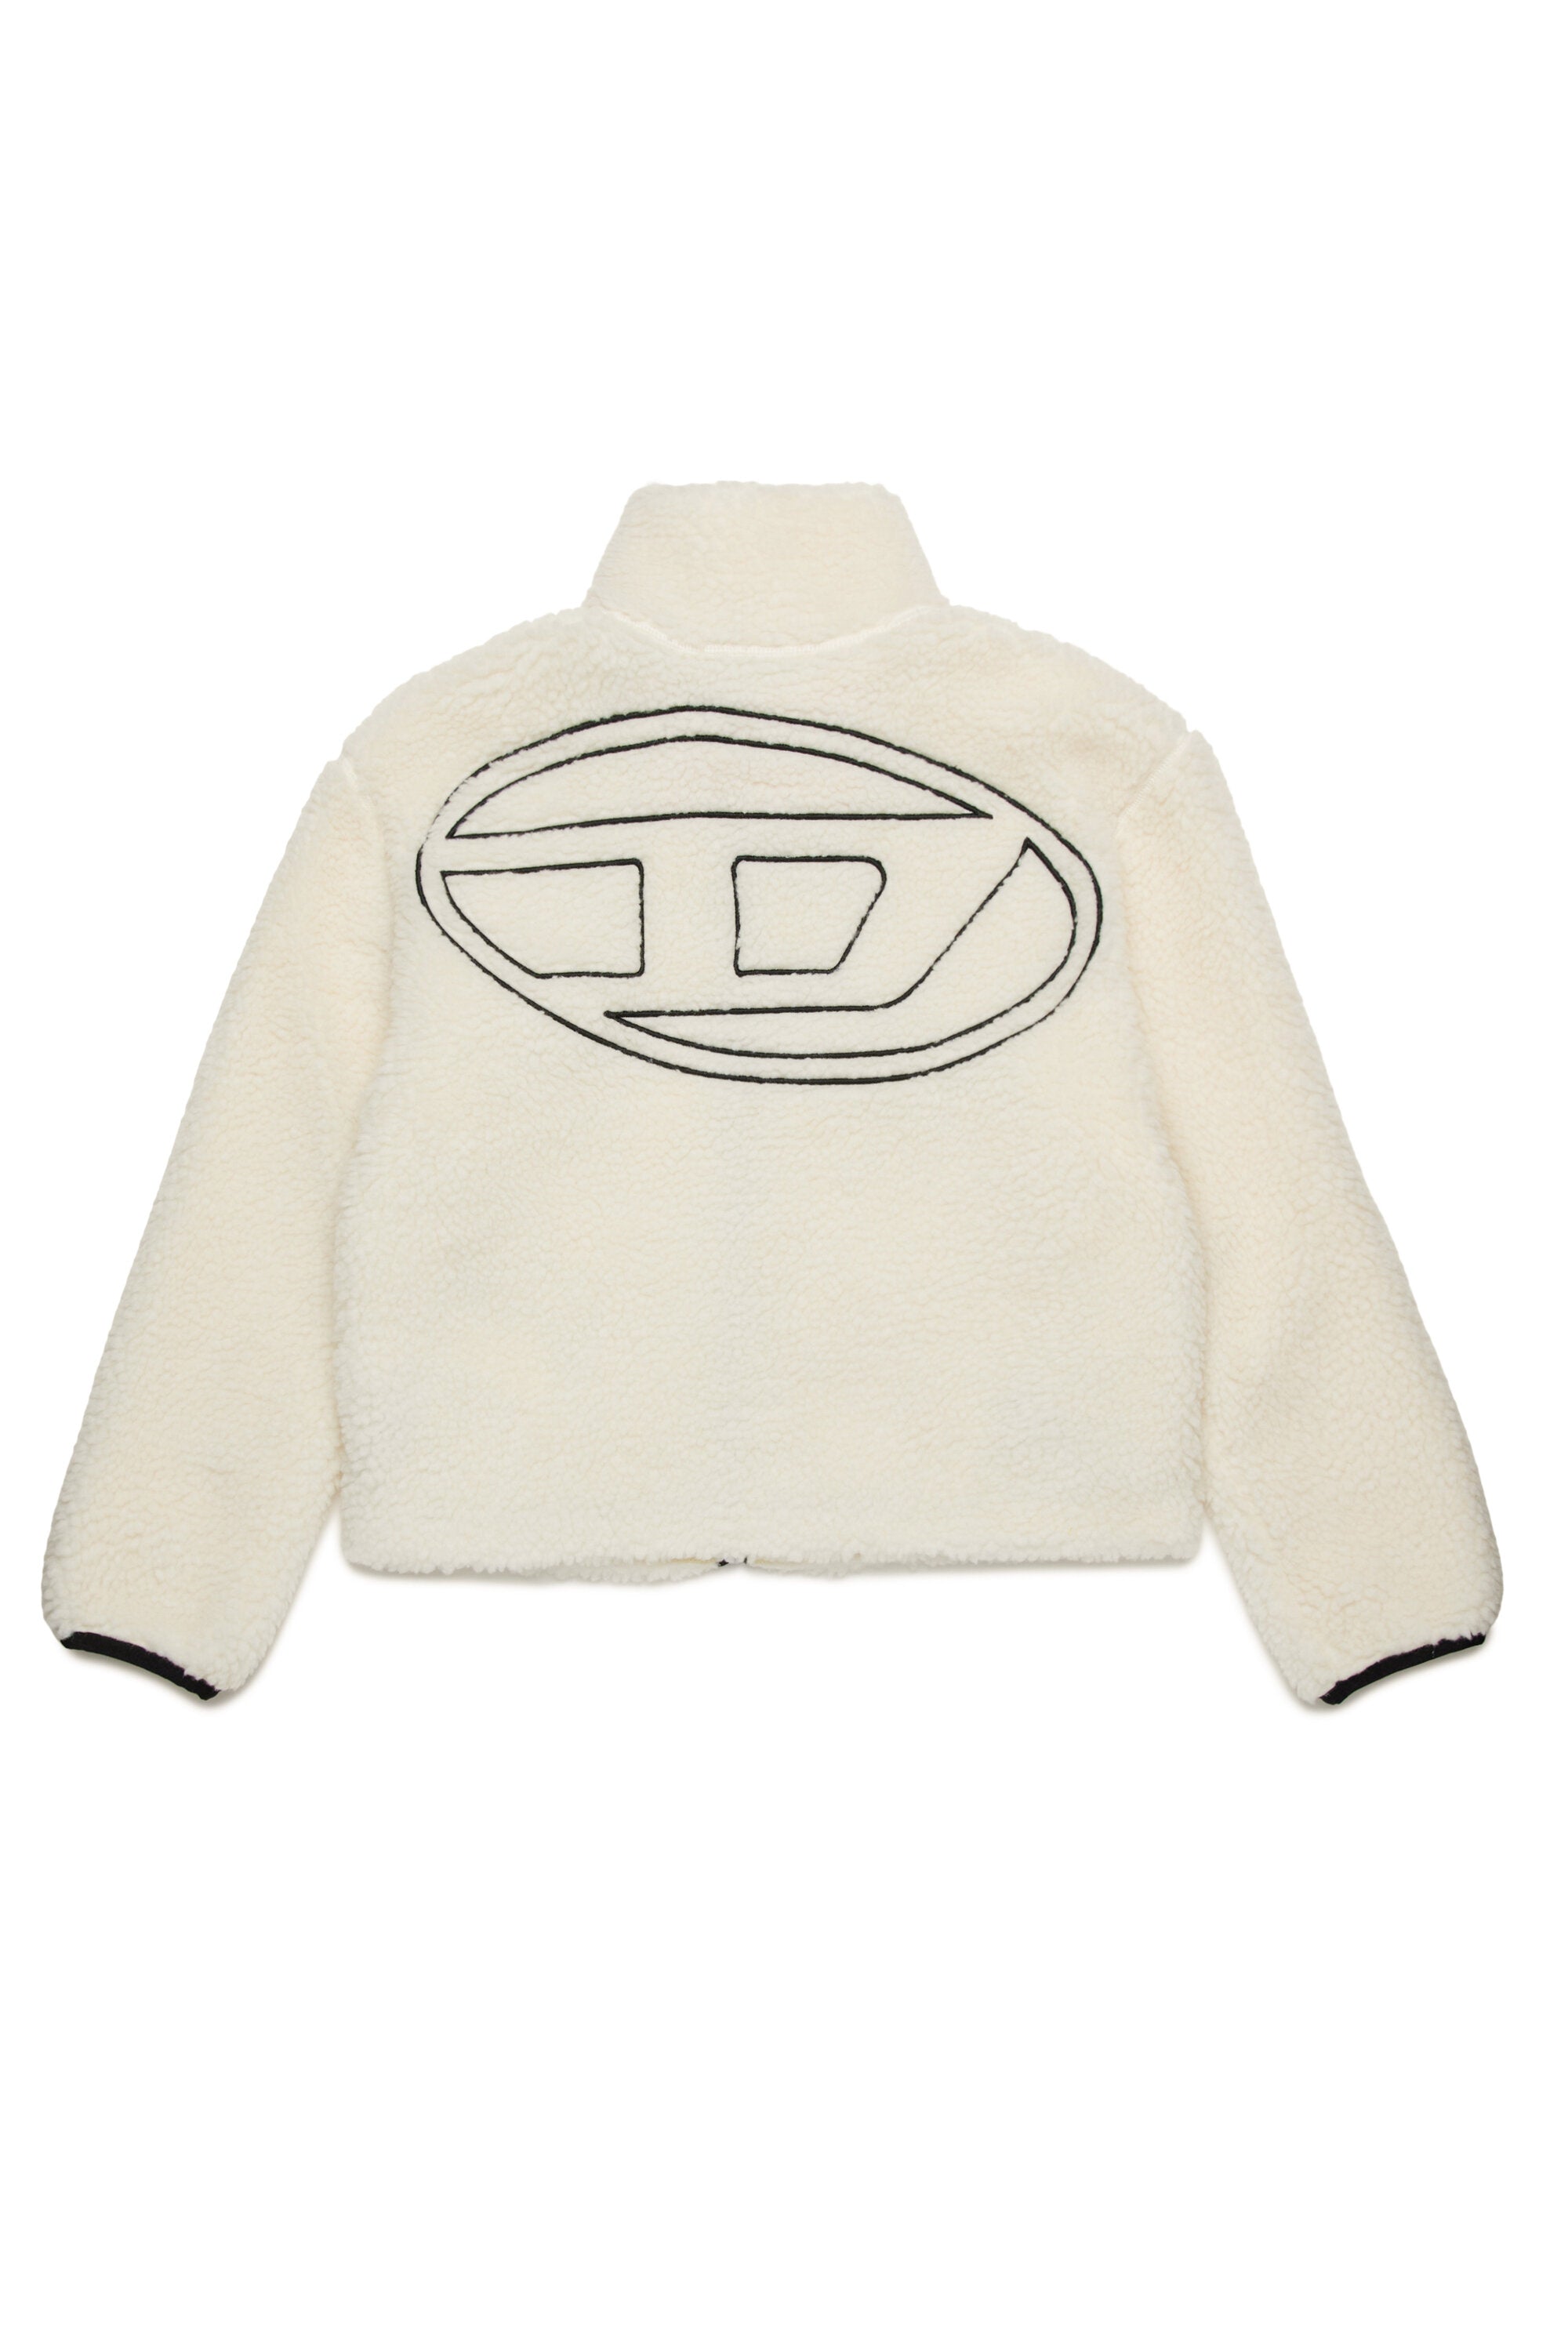 Oval D branded teddy jacket